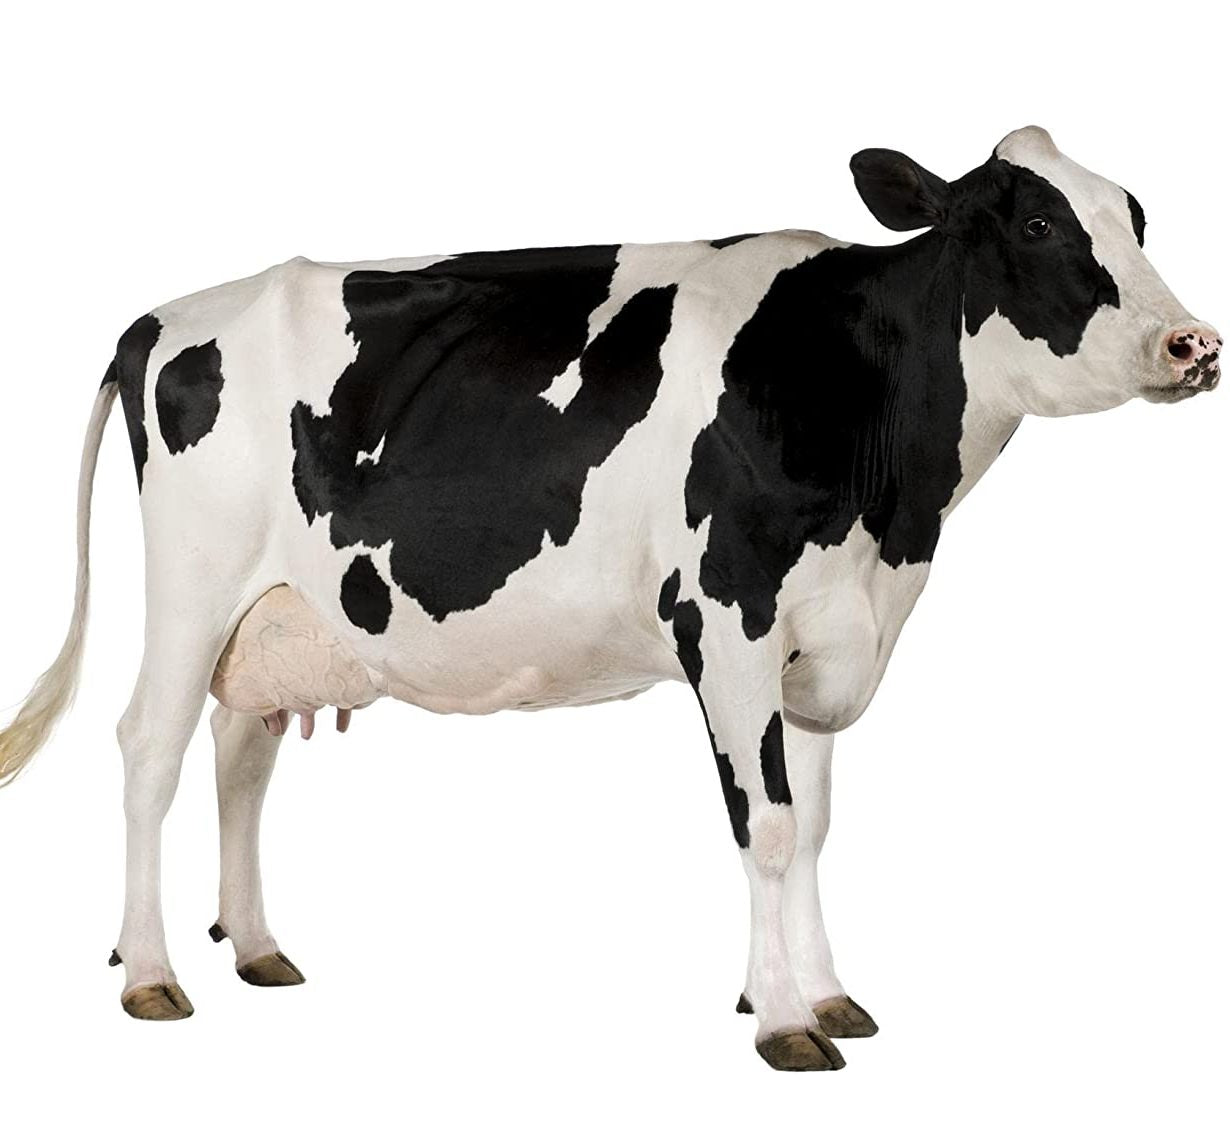 Cow Manure "Organic" 100% Natural Fertilizer 16 & 25Kg سماد البقر